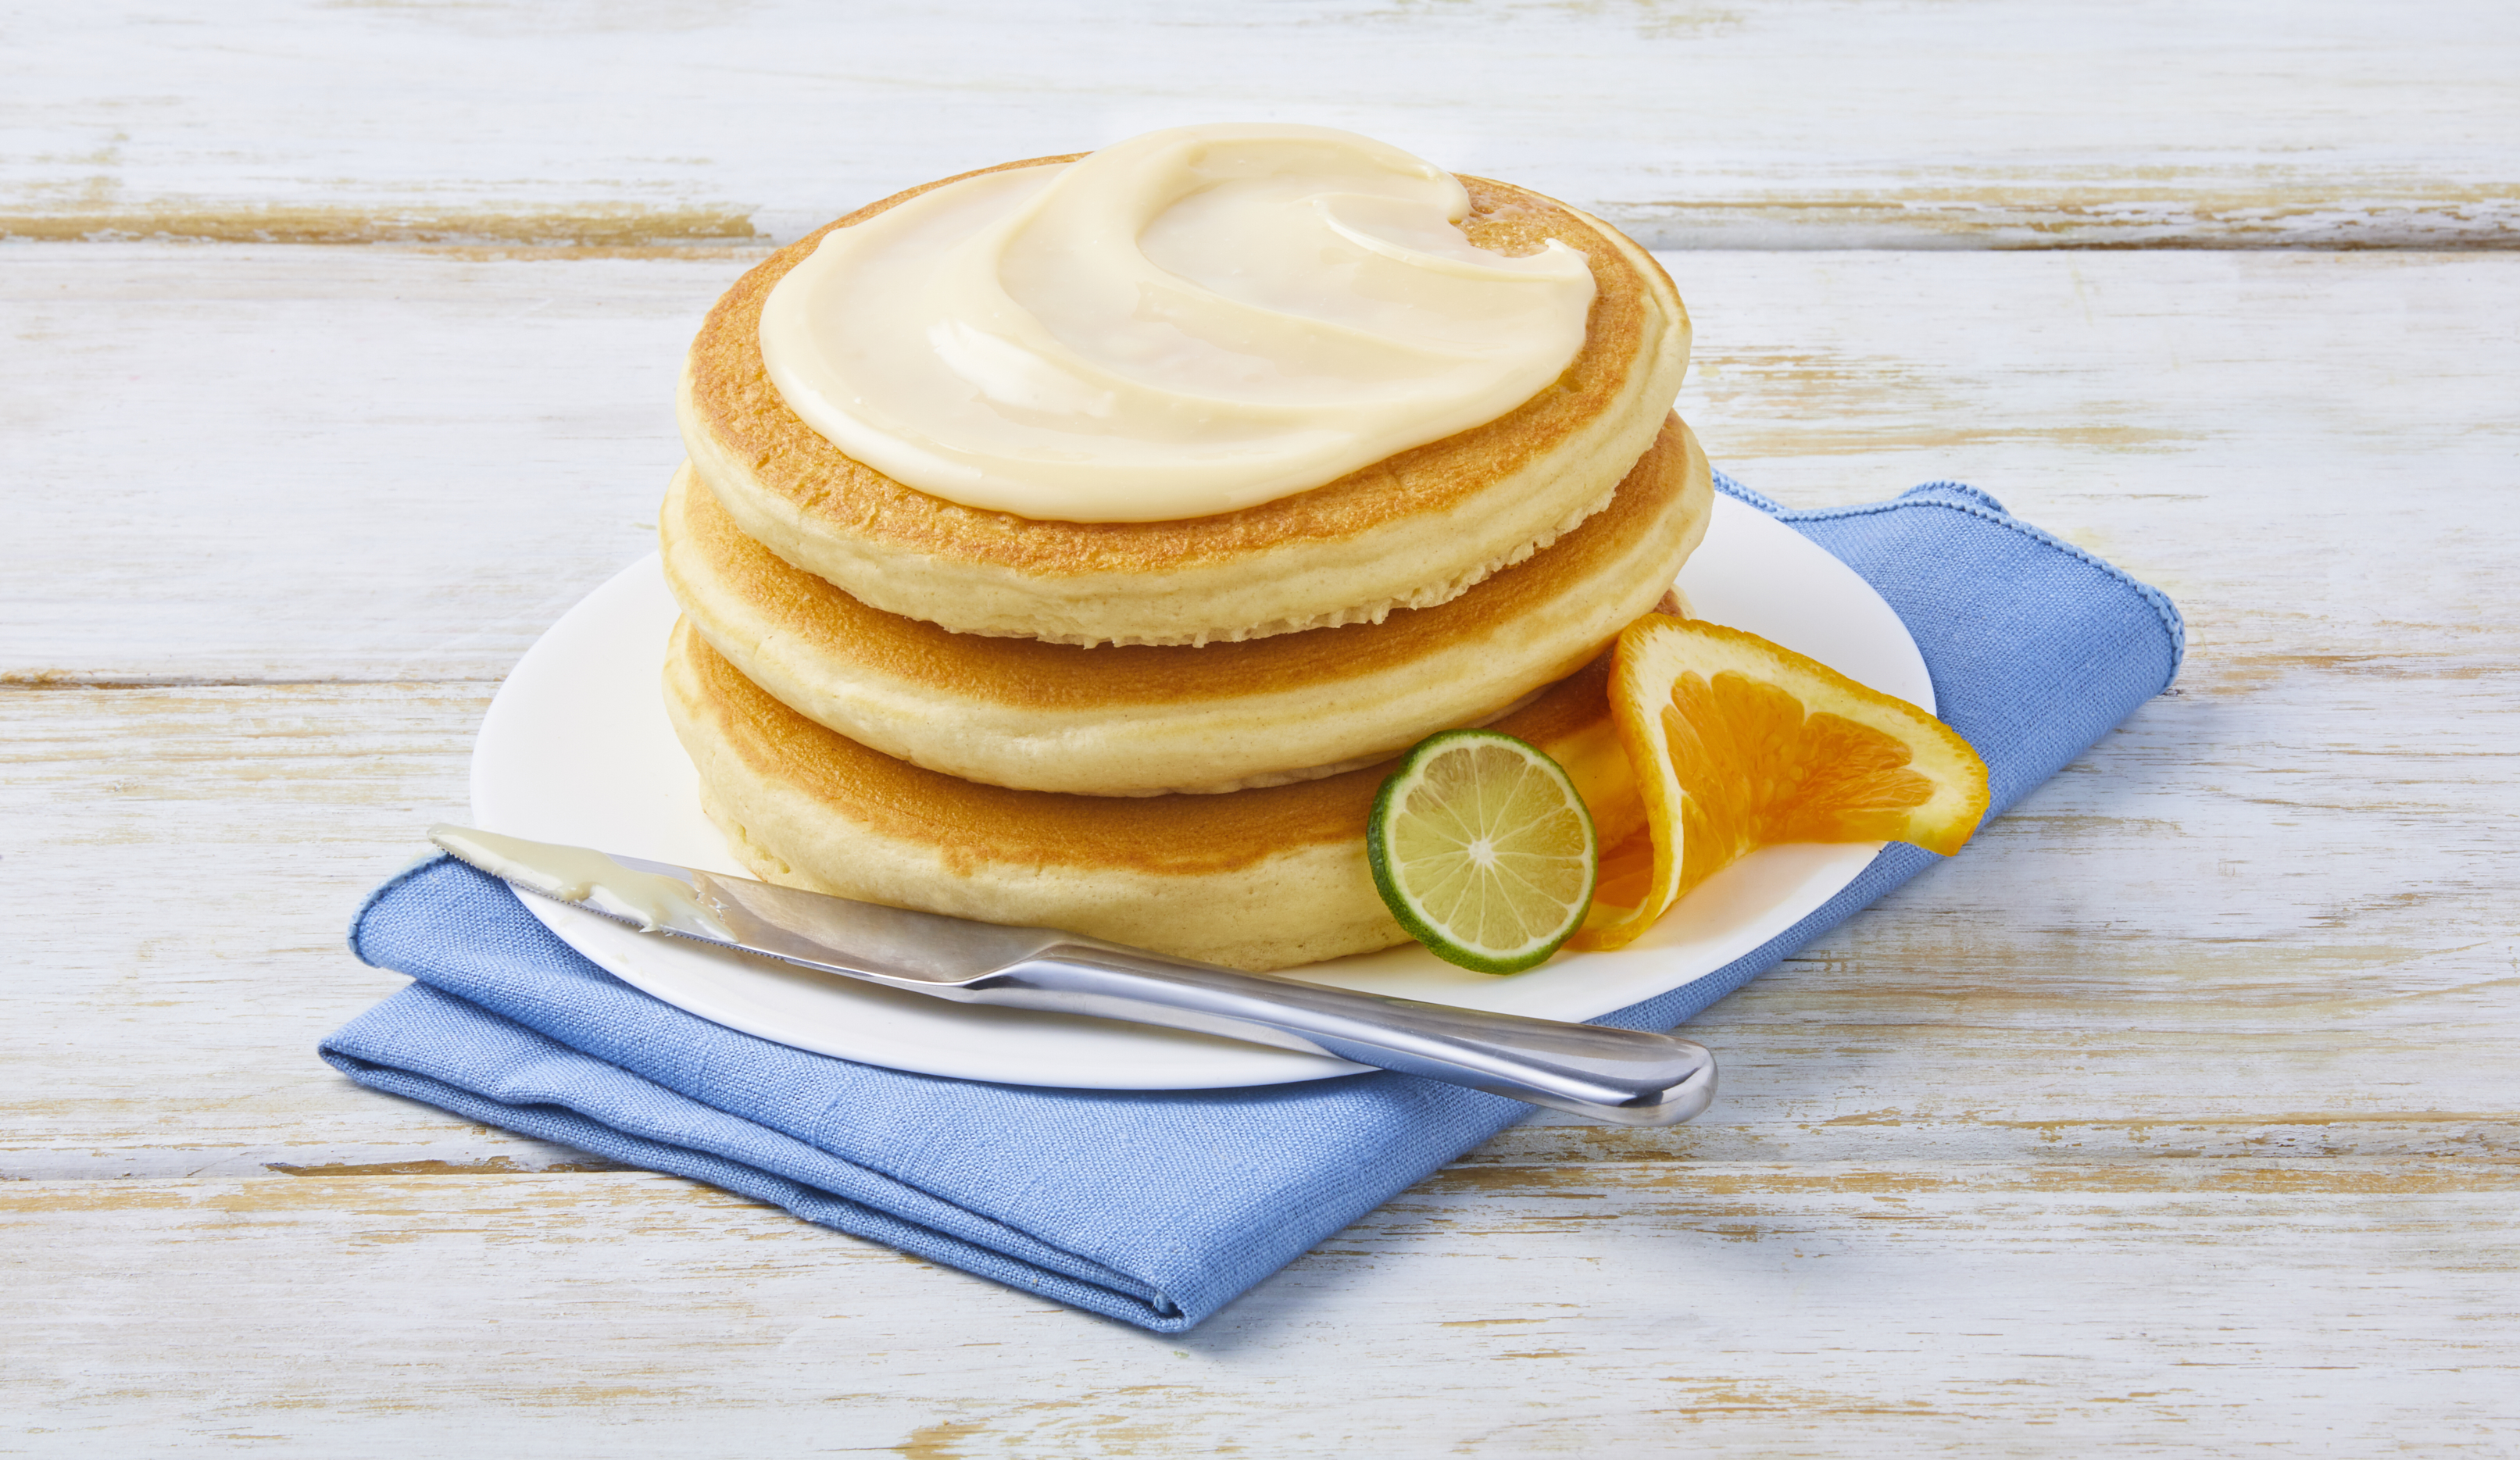 Hot cakes con naranja y limón | Recetas Nestlé